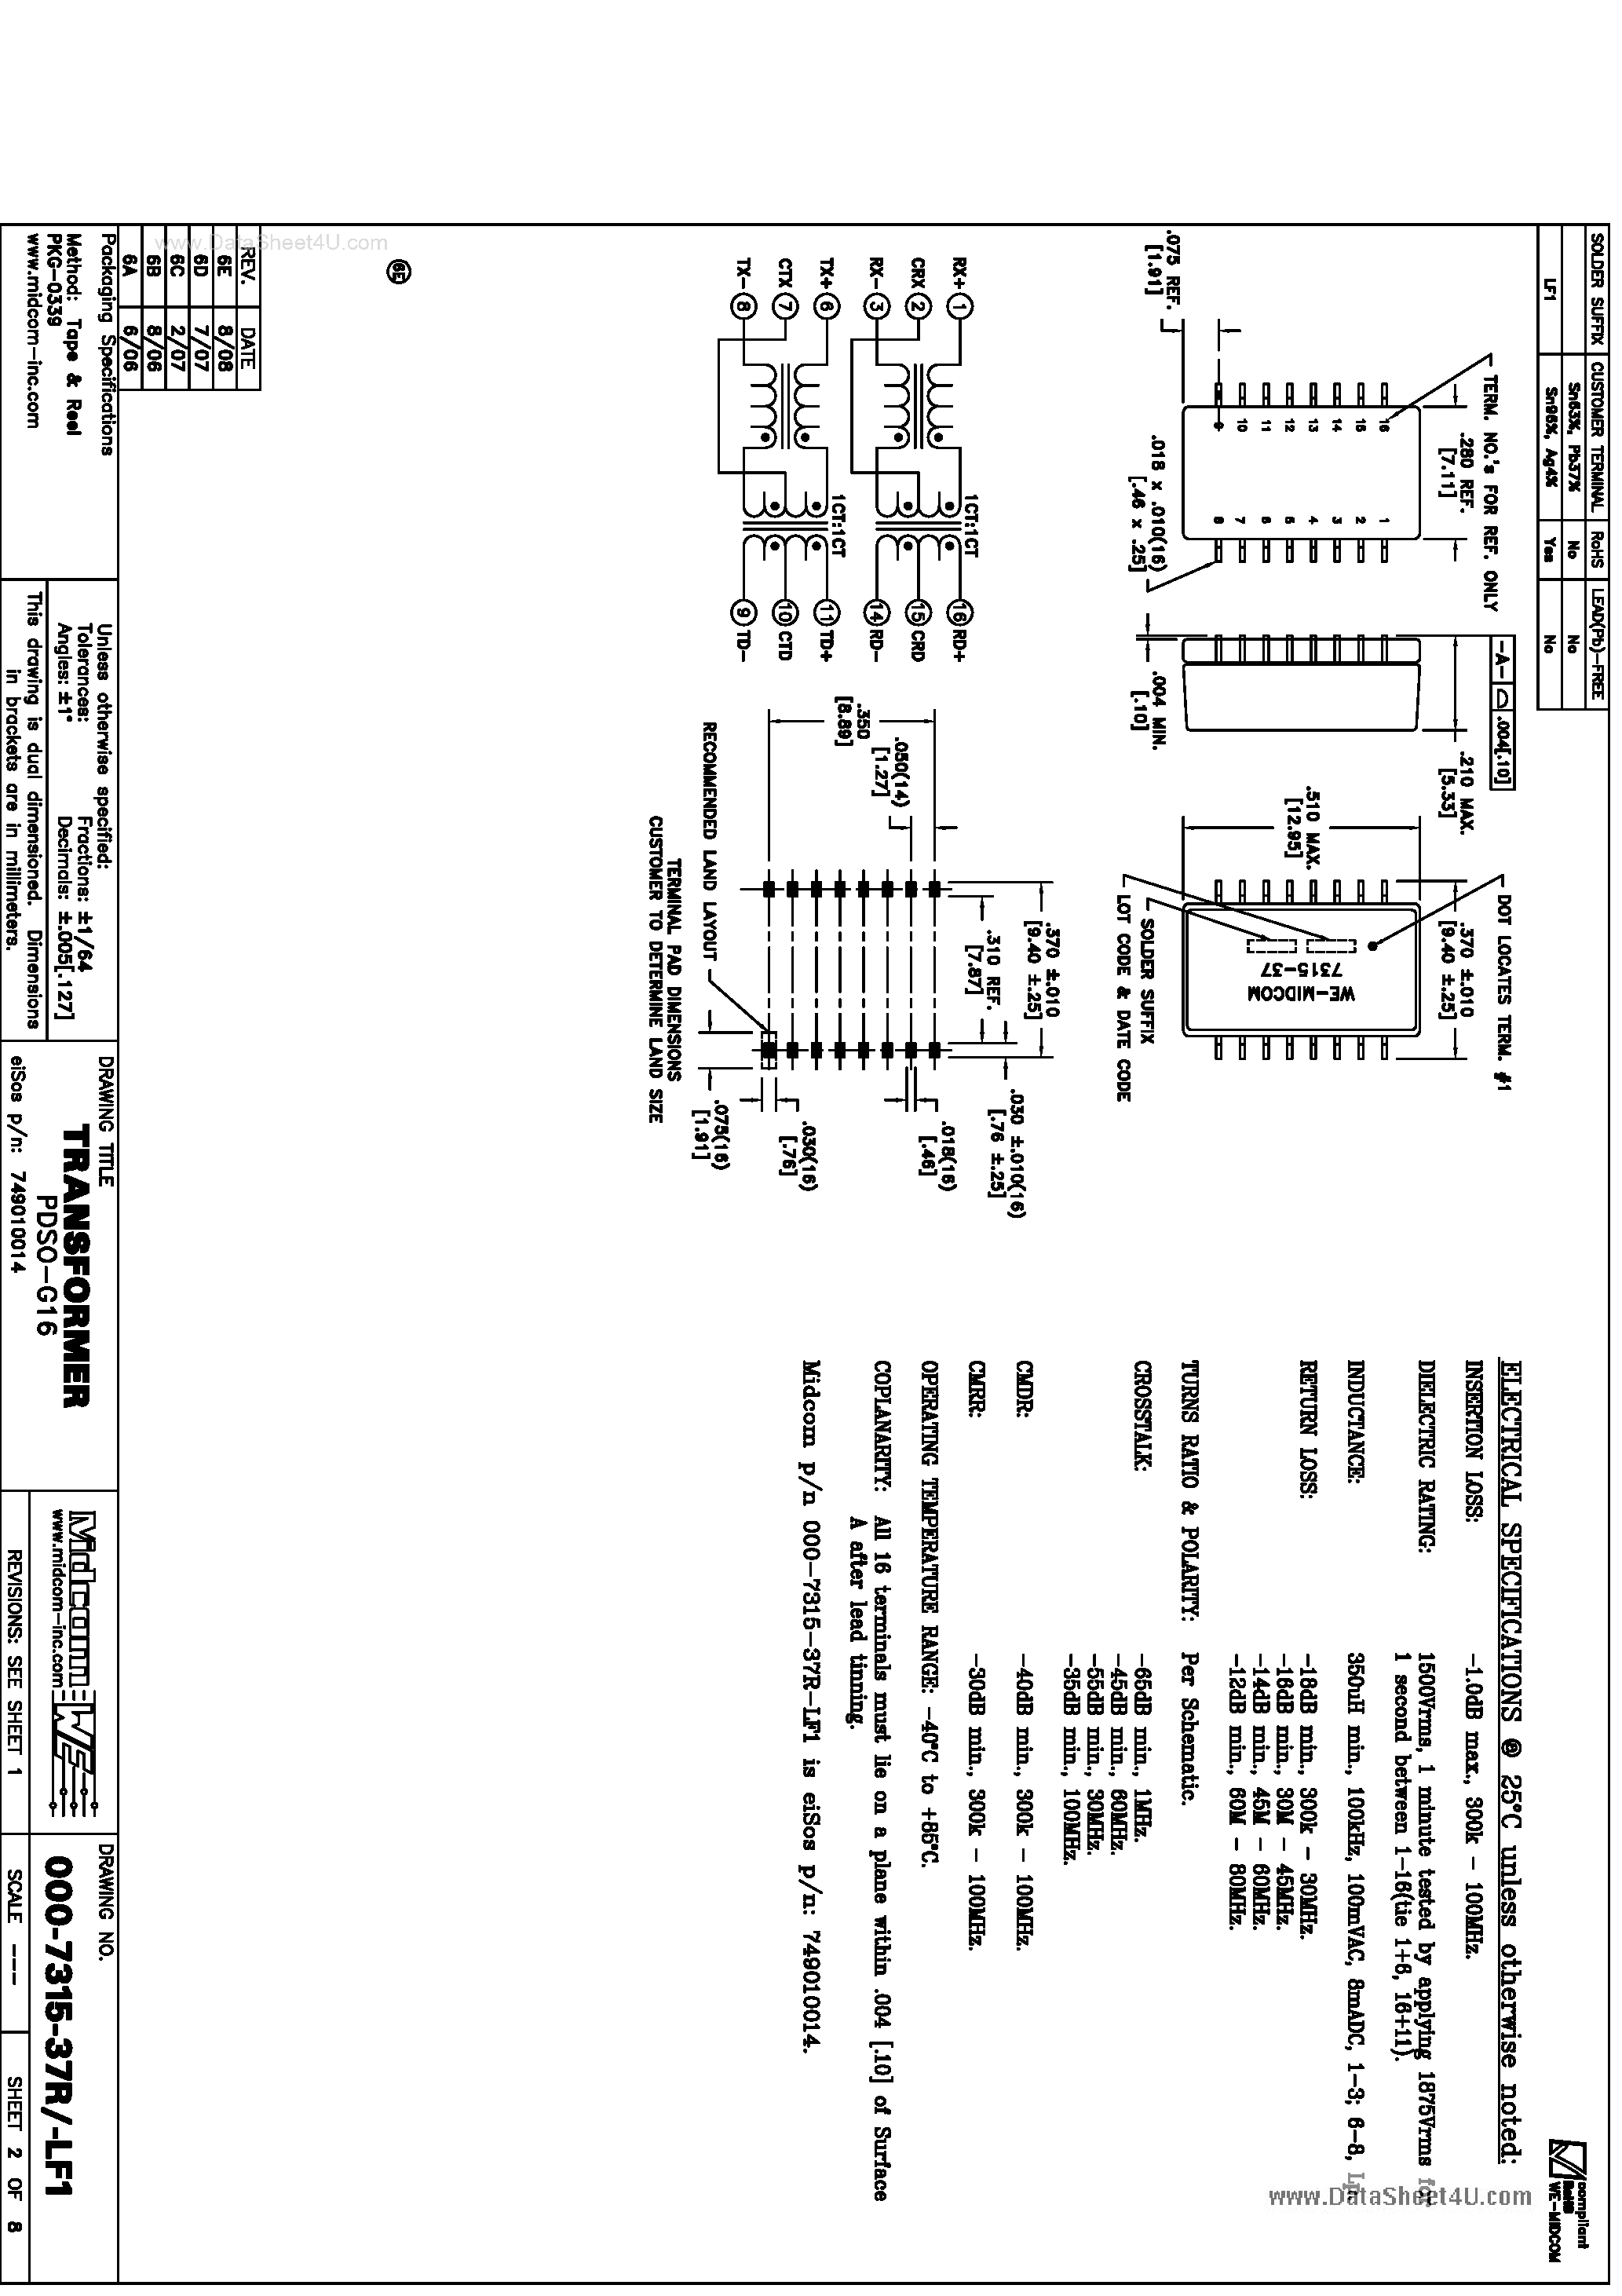 Datasheet 000-7315-37R-LF1 - Discrete Single Port 10/100 Base-T PDSO-G16 page 1